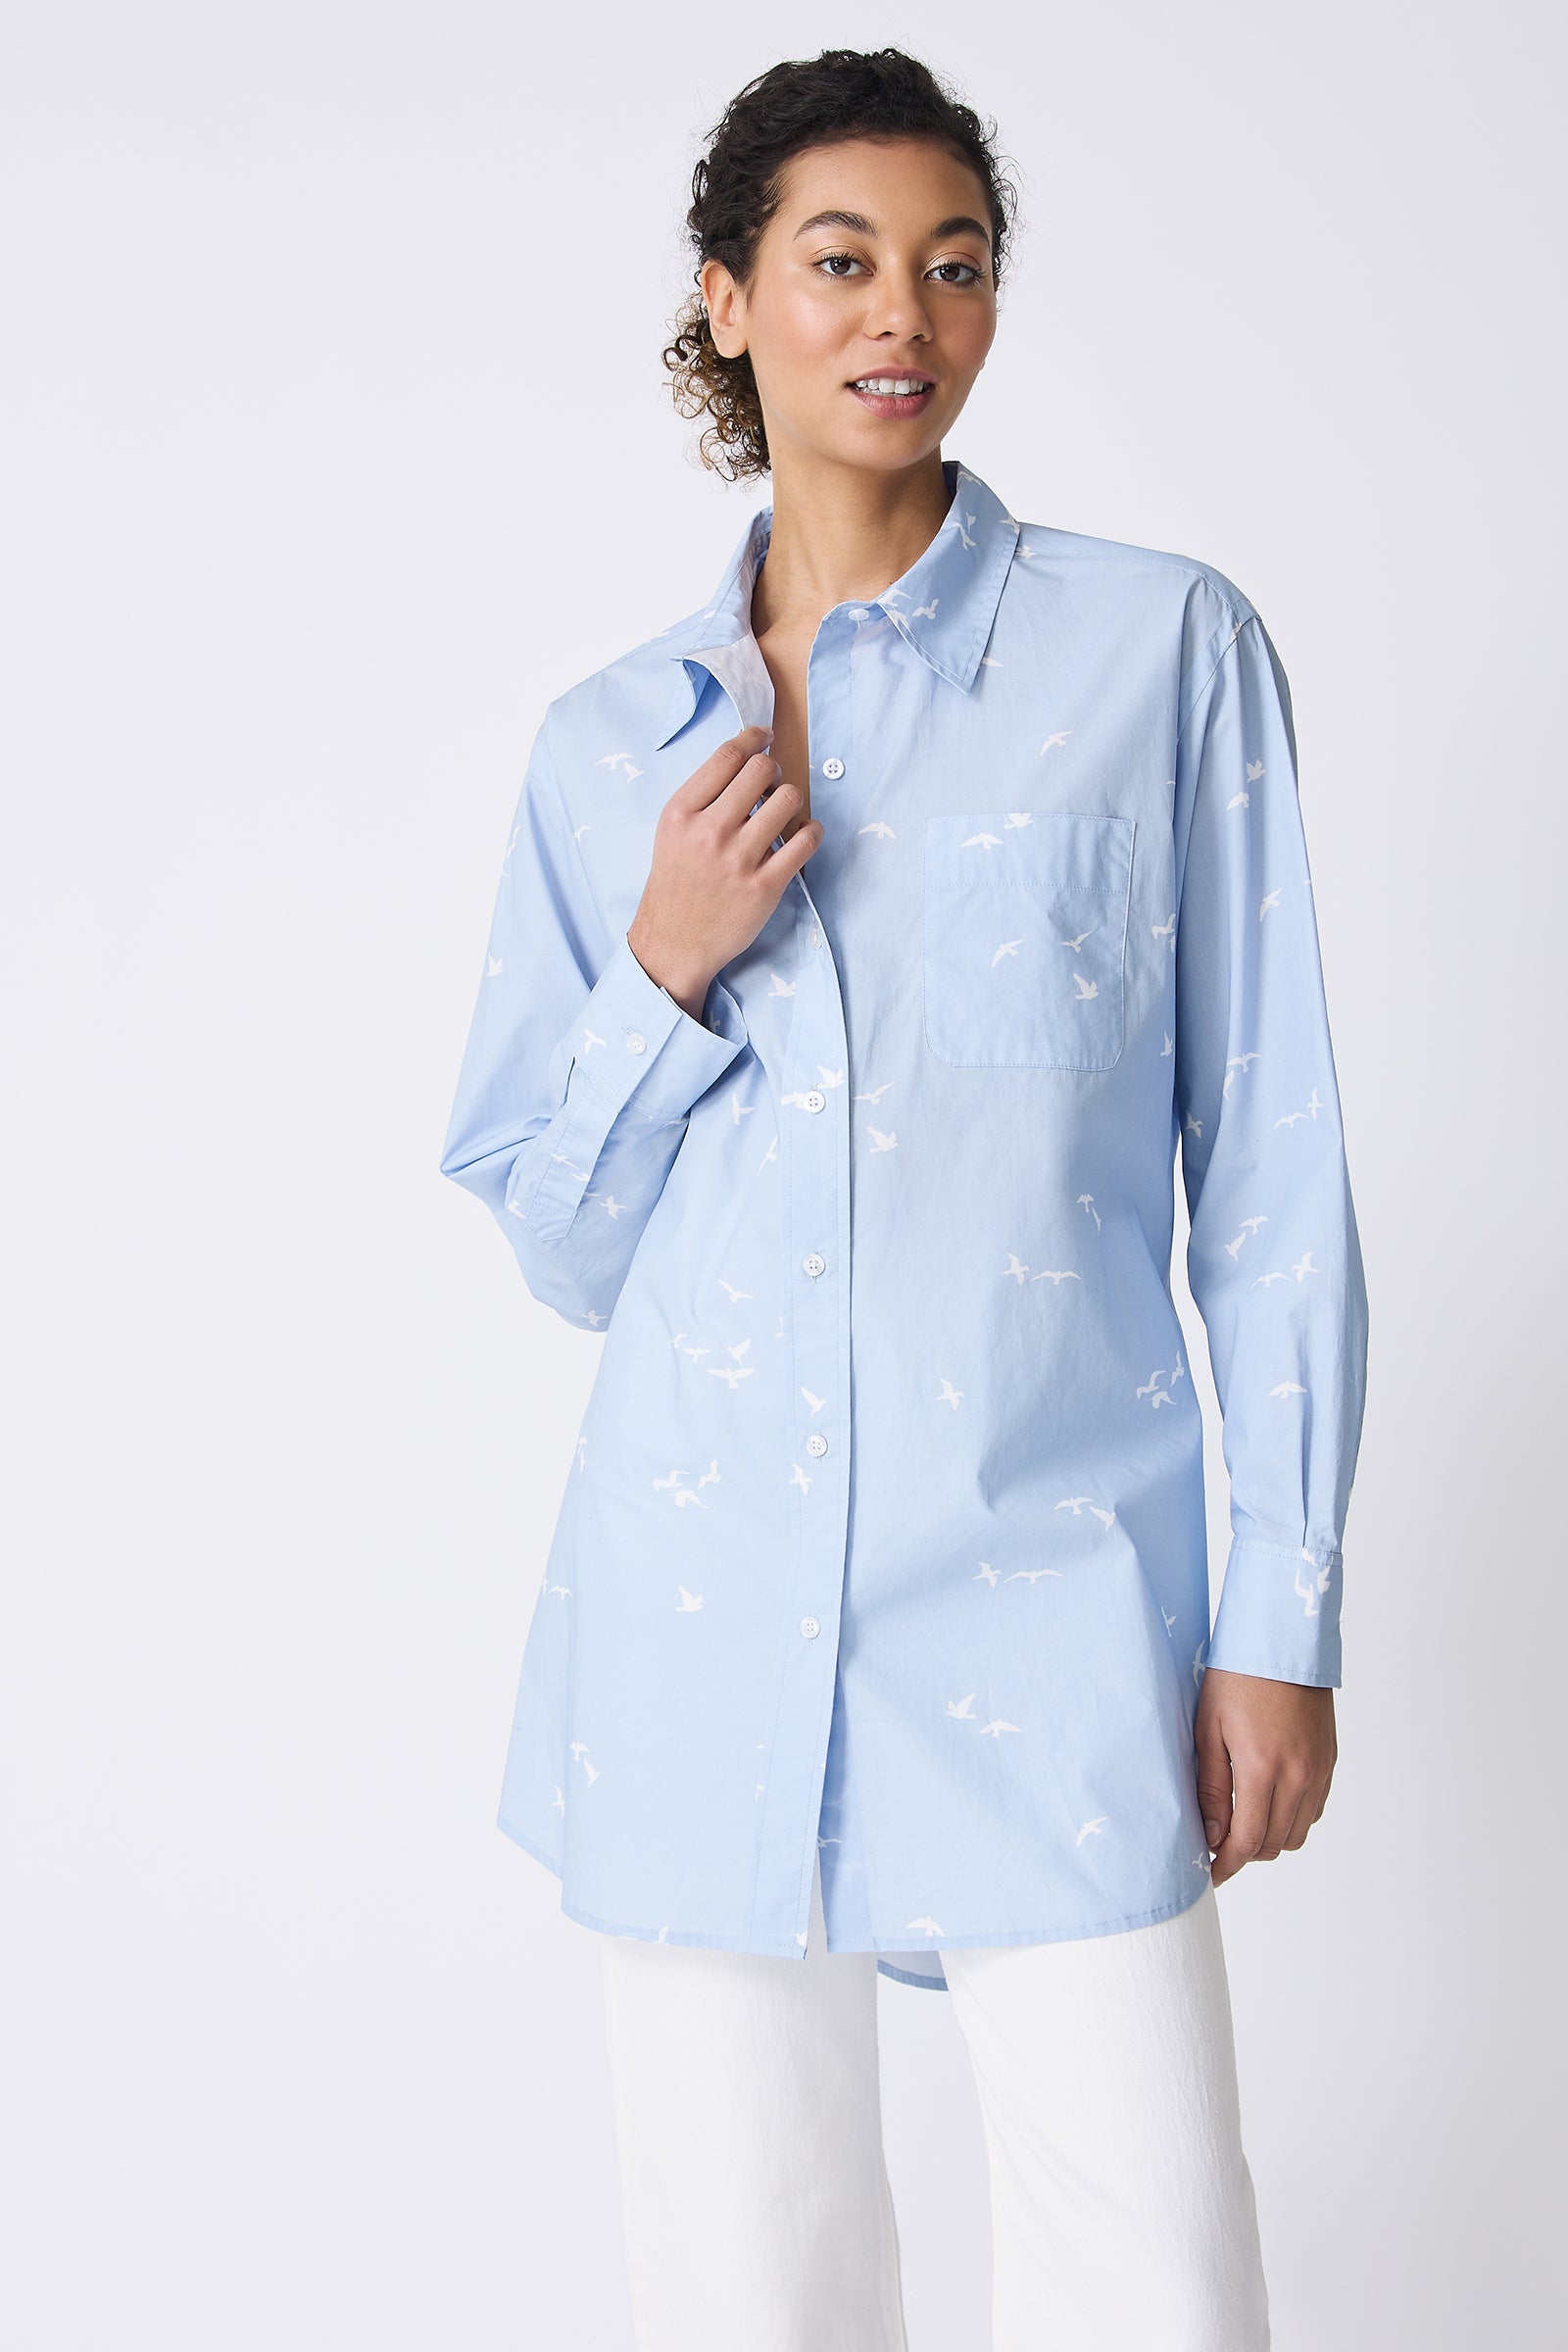 Kal Rieman Deanna Shirt in Oxford Blue Bird Print on model touching button front view